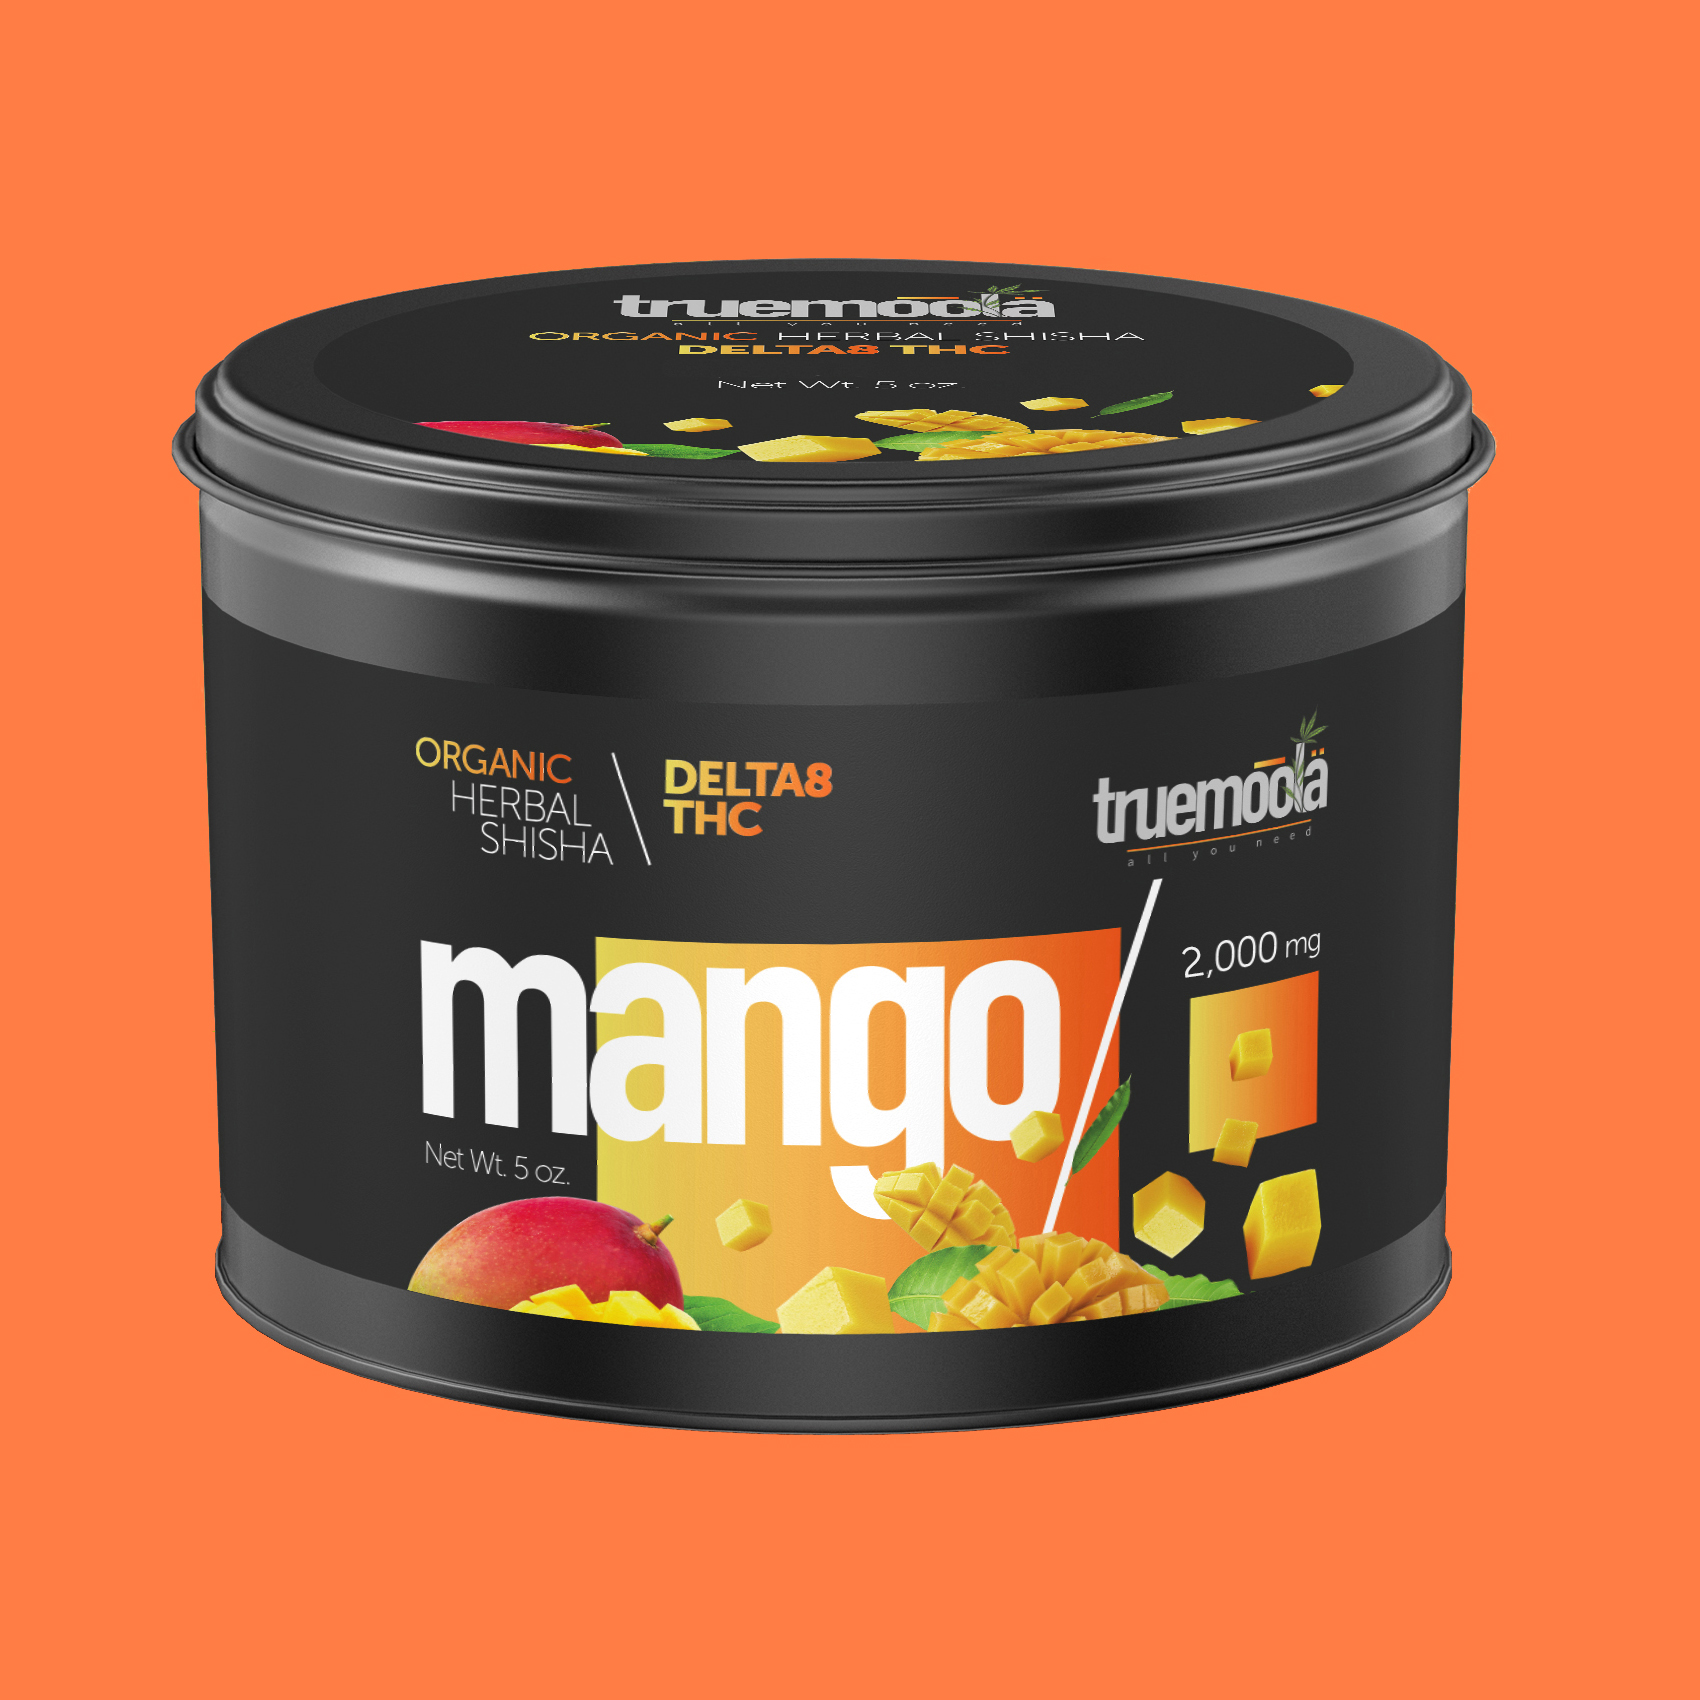 MangoFront